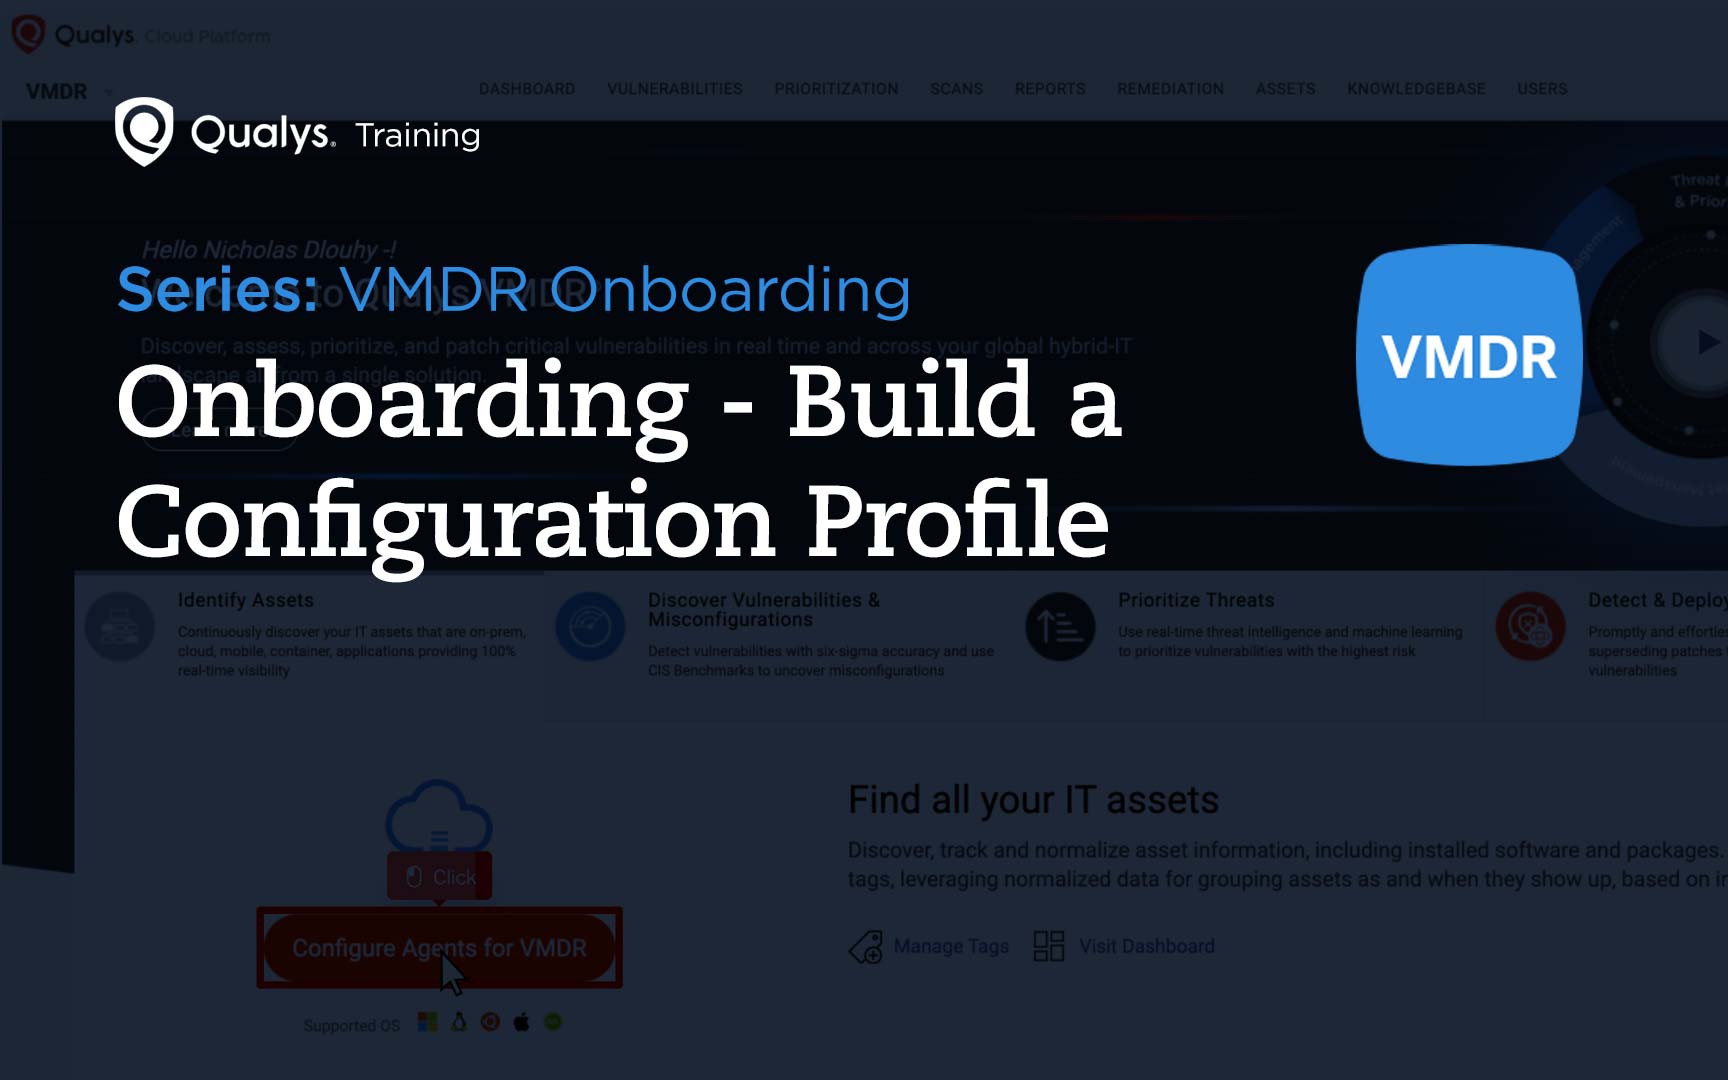 Onboarding - Build a Configuration Profile